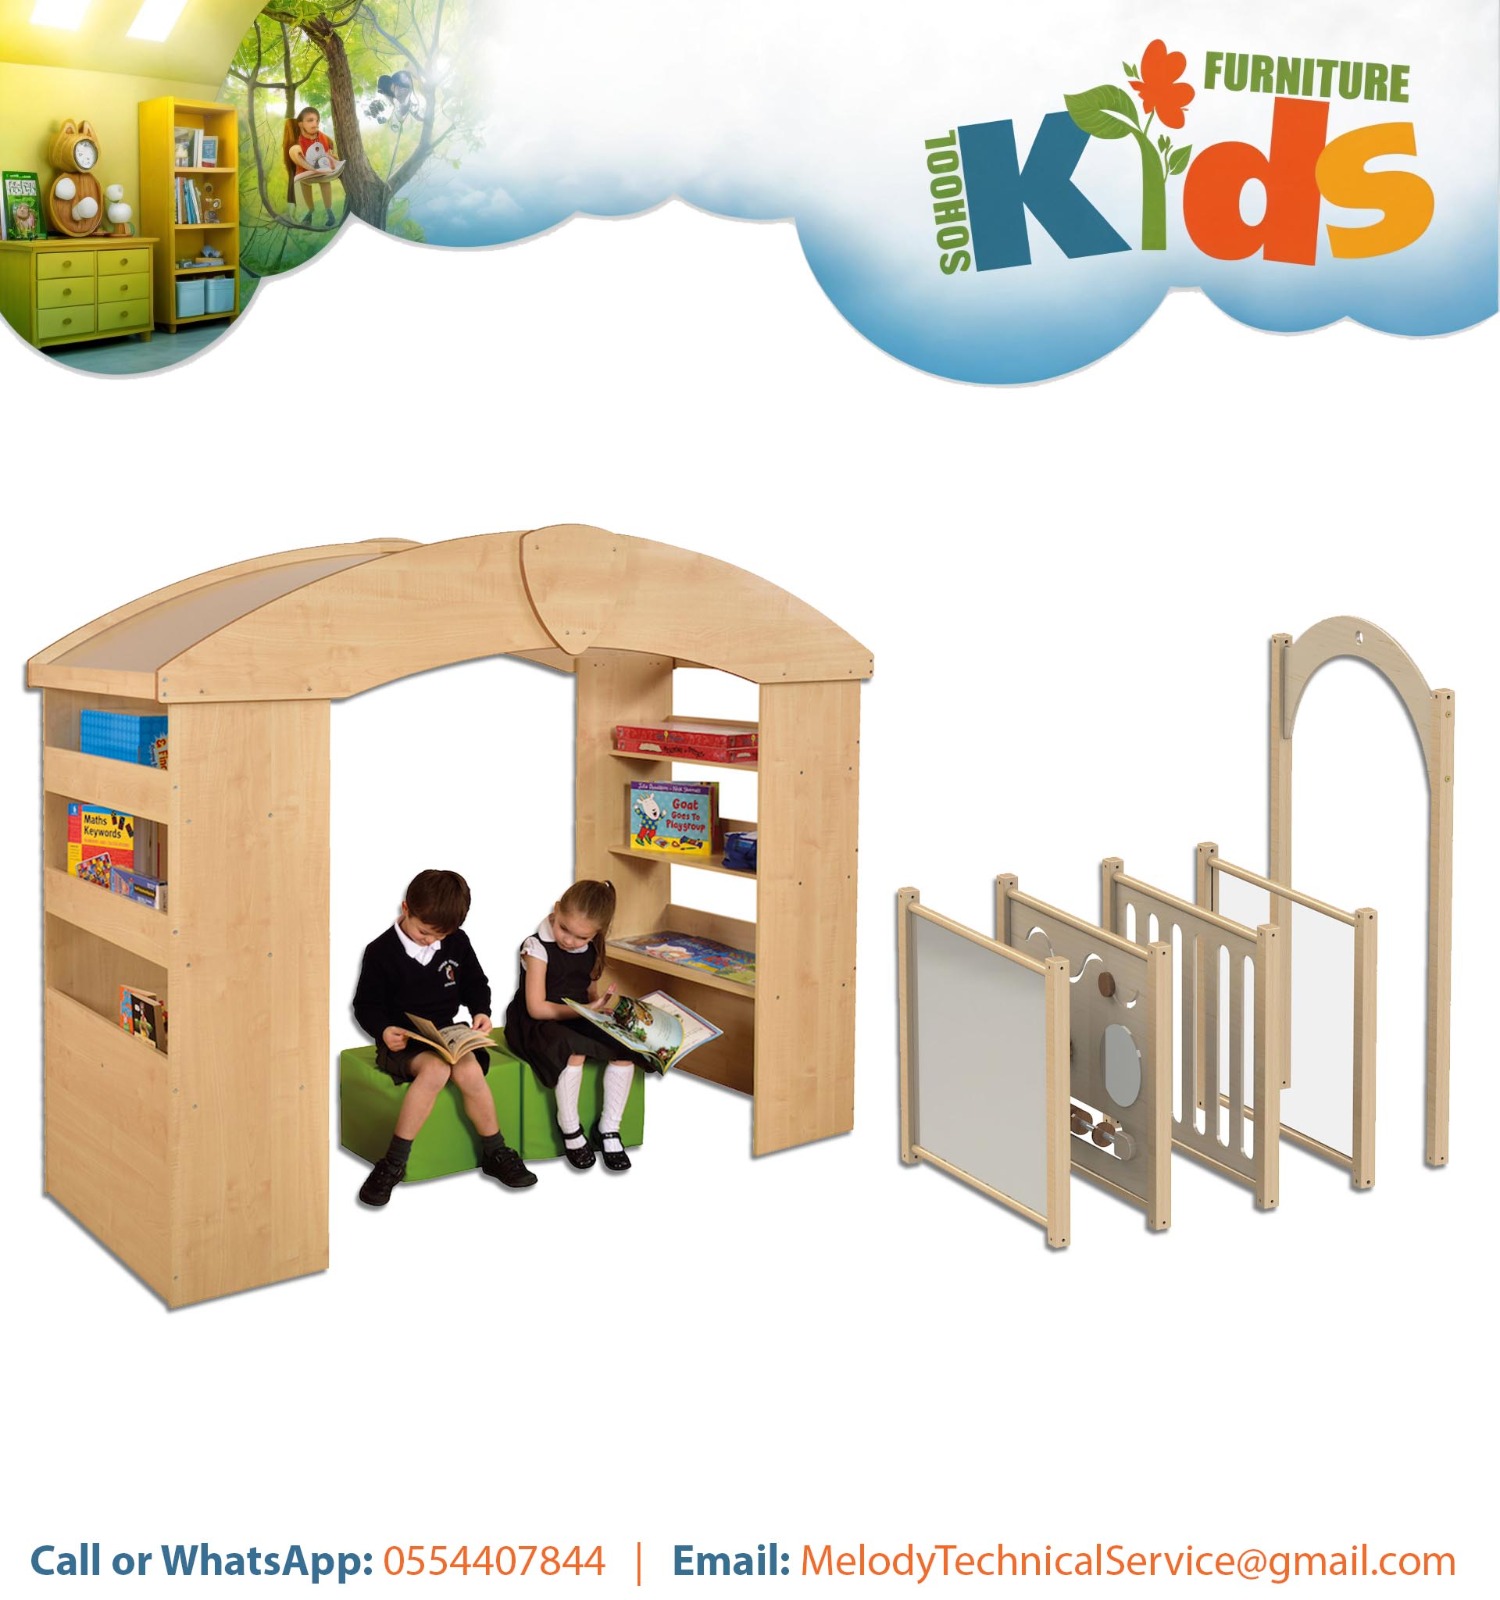 School Furniture Manufacturer and Suppliers in Dubai